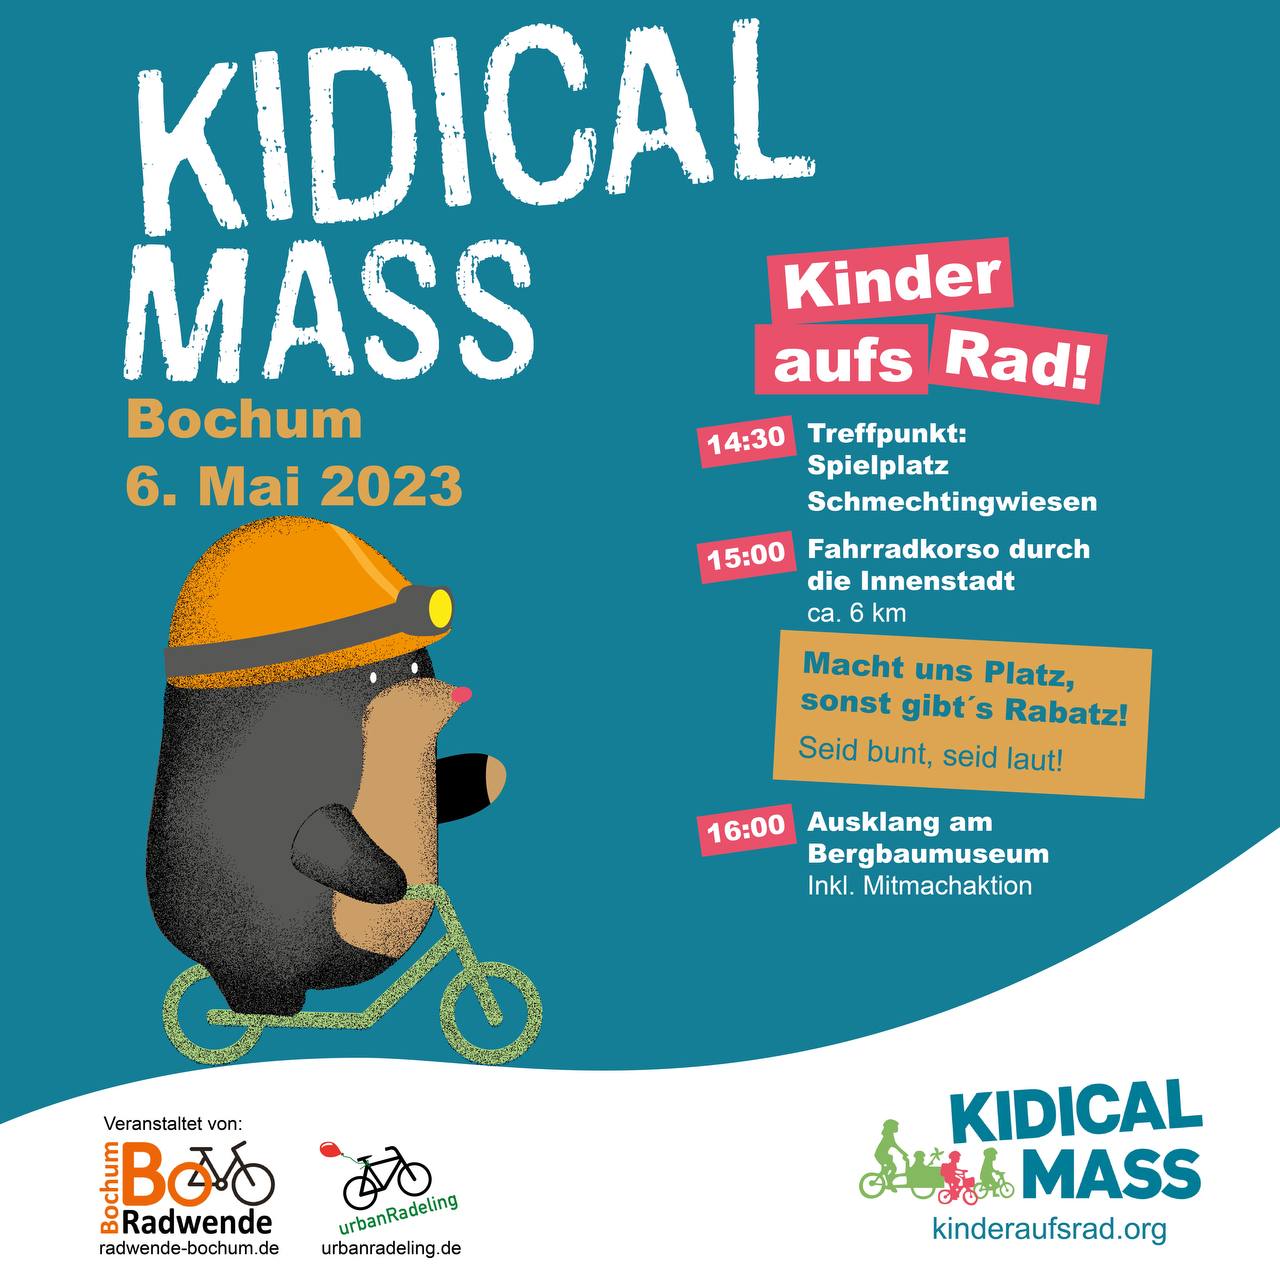 4. Kidical Mass Bochum: Macht uns Platz, sonst gibt’s Rabatz